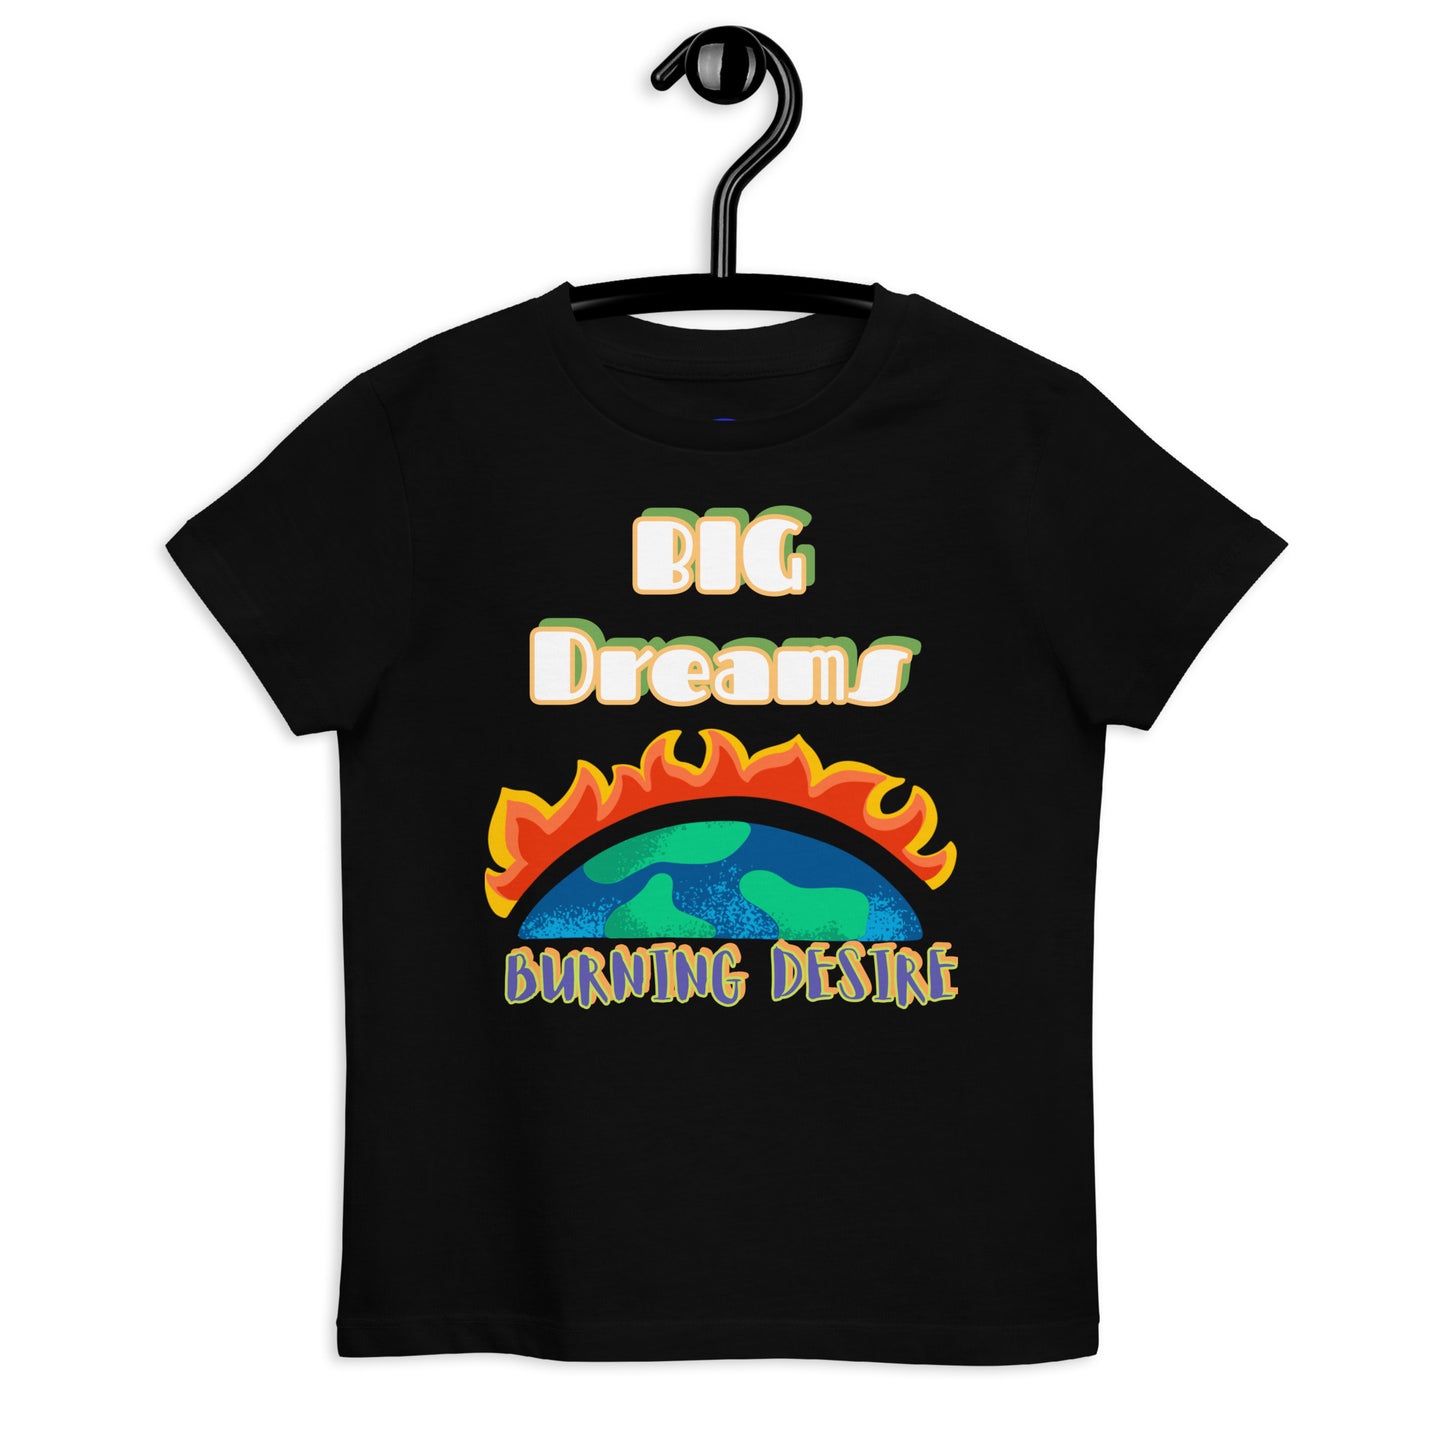 Big Dreams Burning Desire Organic cotton kids t-shirt